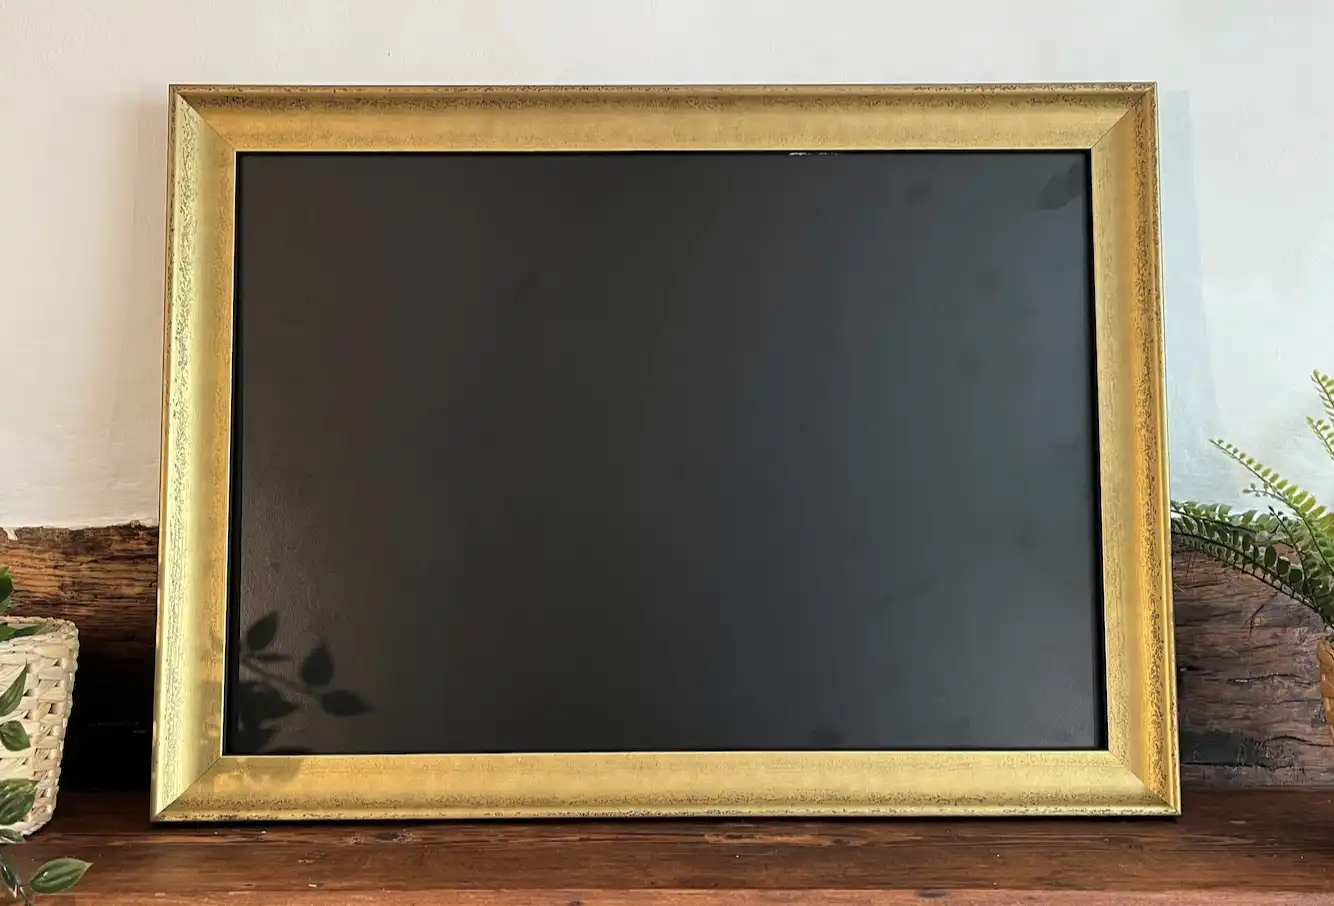 Professionally Framed Chalkboard